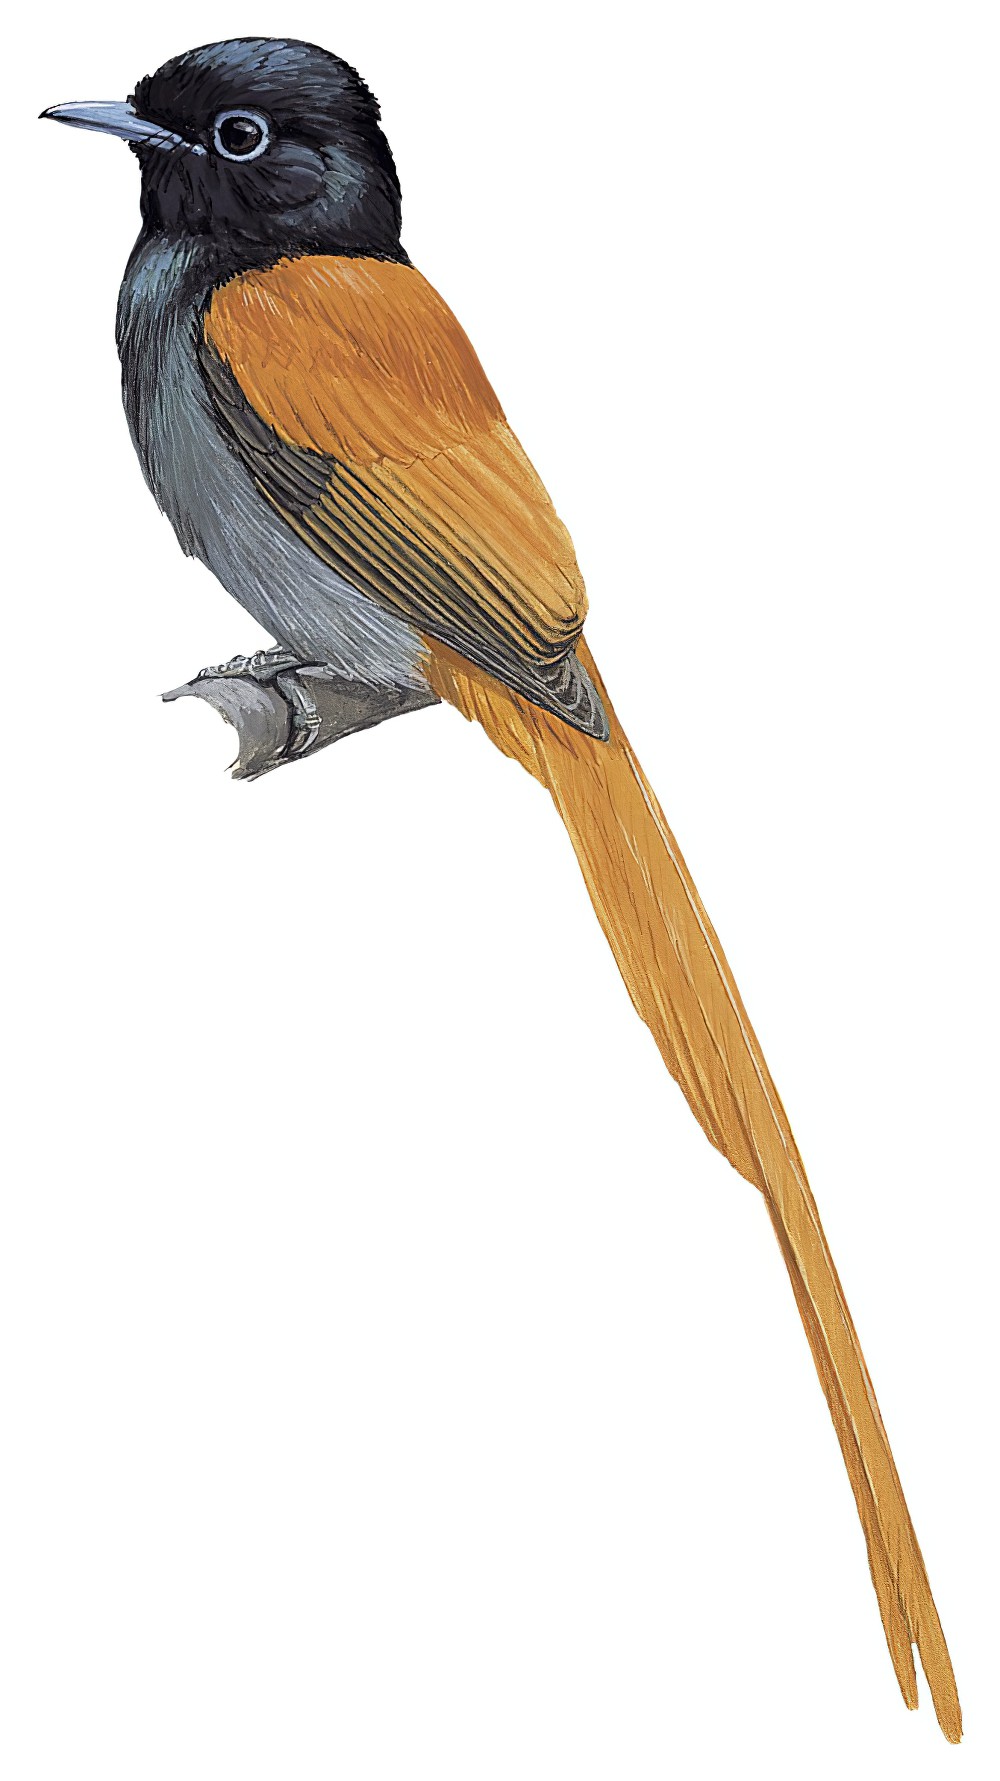 棕臀寿带 / Rufous-vented Paradise Flycatcher / Terpsiphone rufocinerea